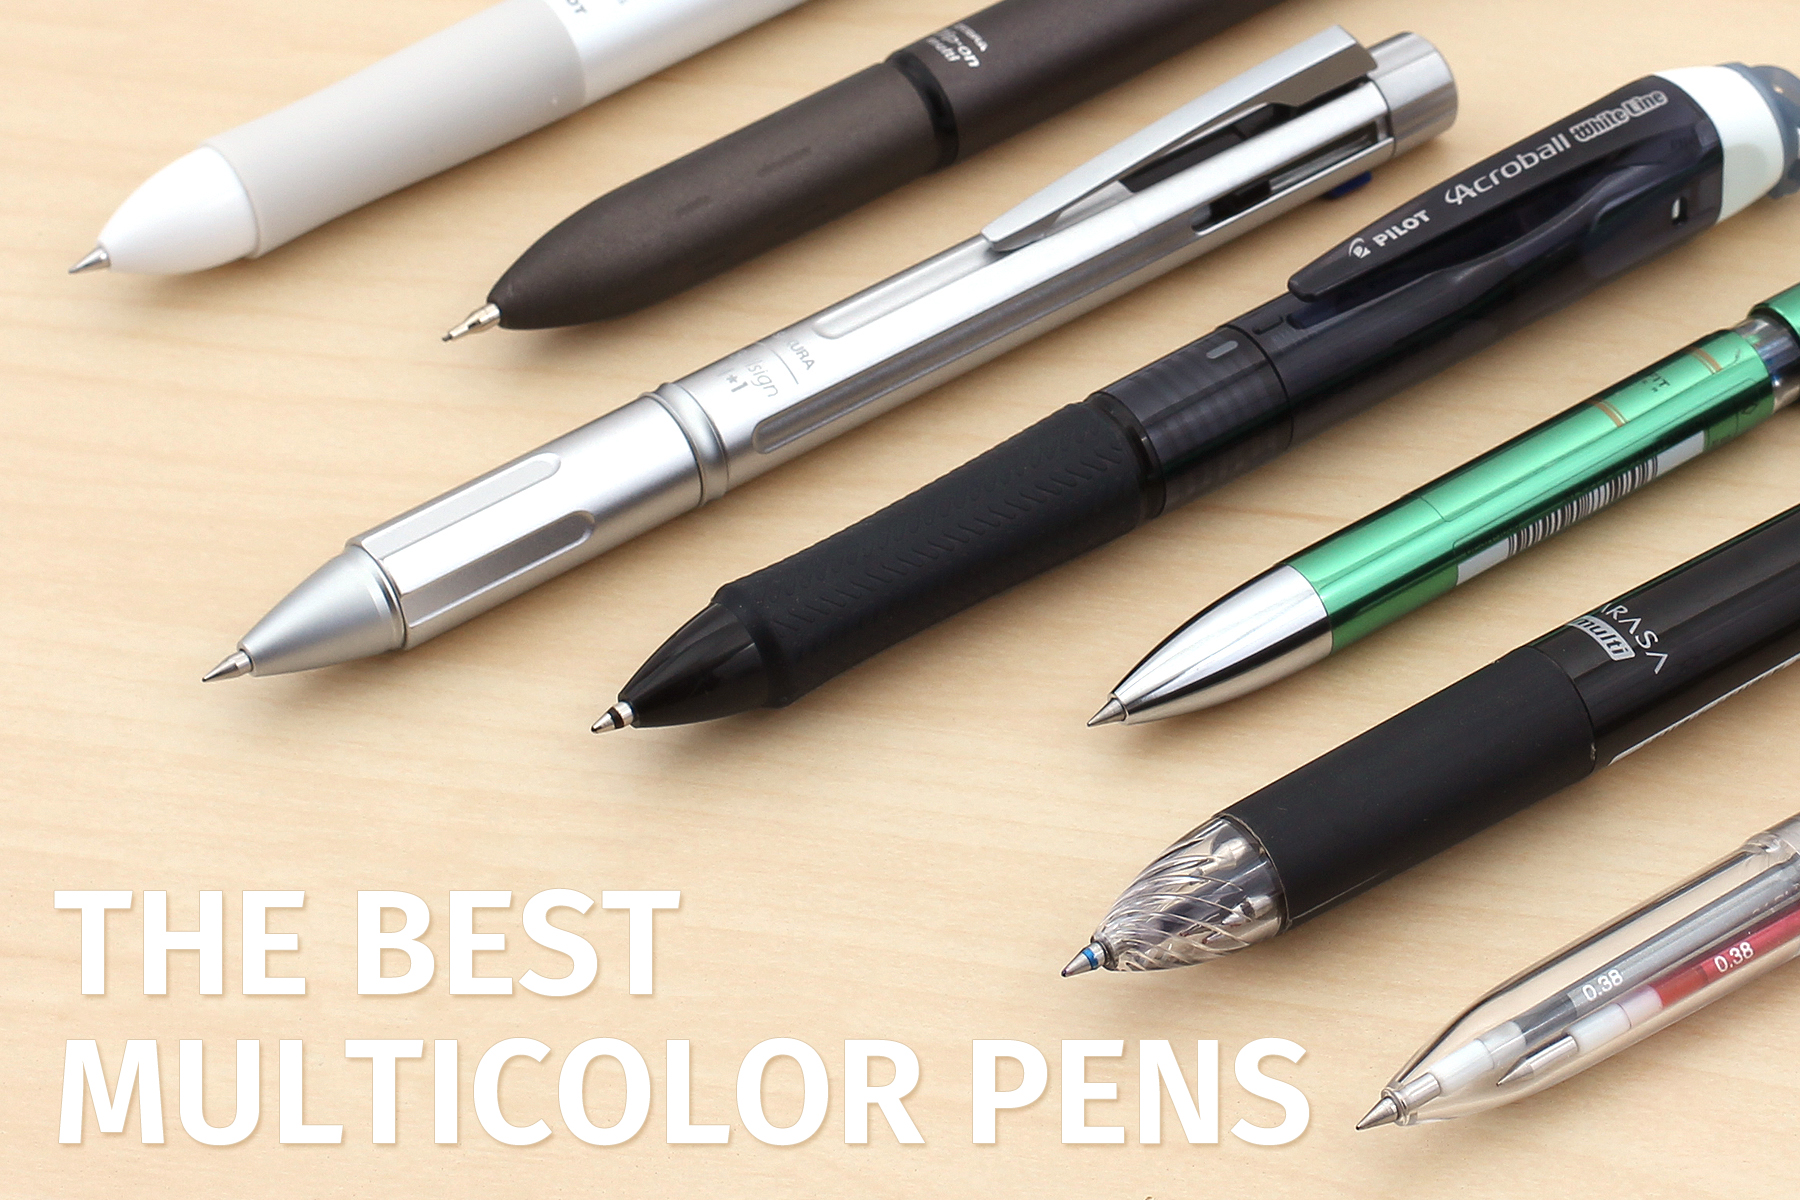 6 in 1 MultiColor Pen 5 Color Retractable Ballpoint Pen With 1 Automatic Pencil 